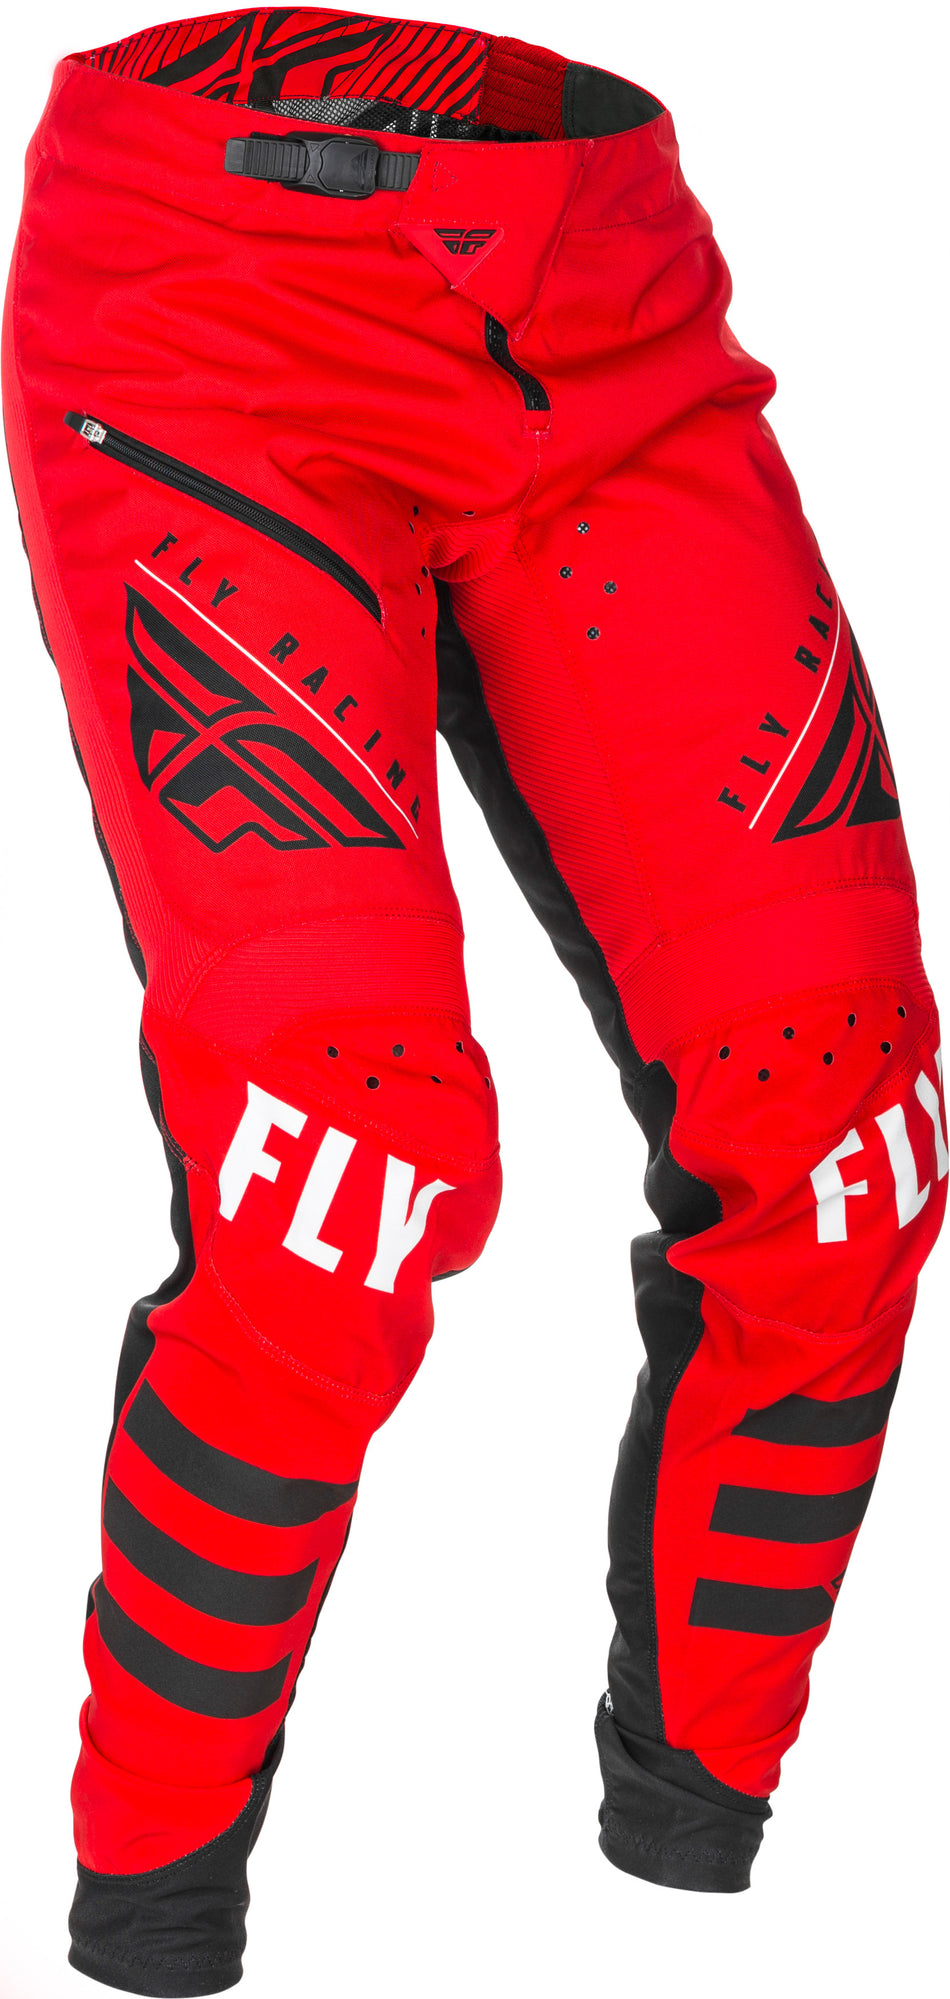 FLY RACING Kinetic Bicycle Pants Red/Black Sz 28 373-04228